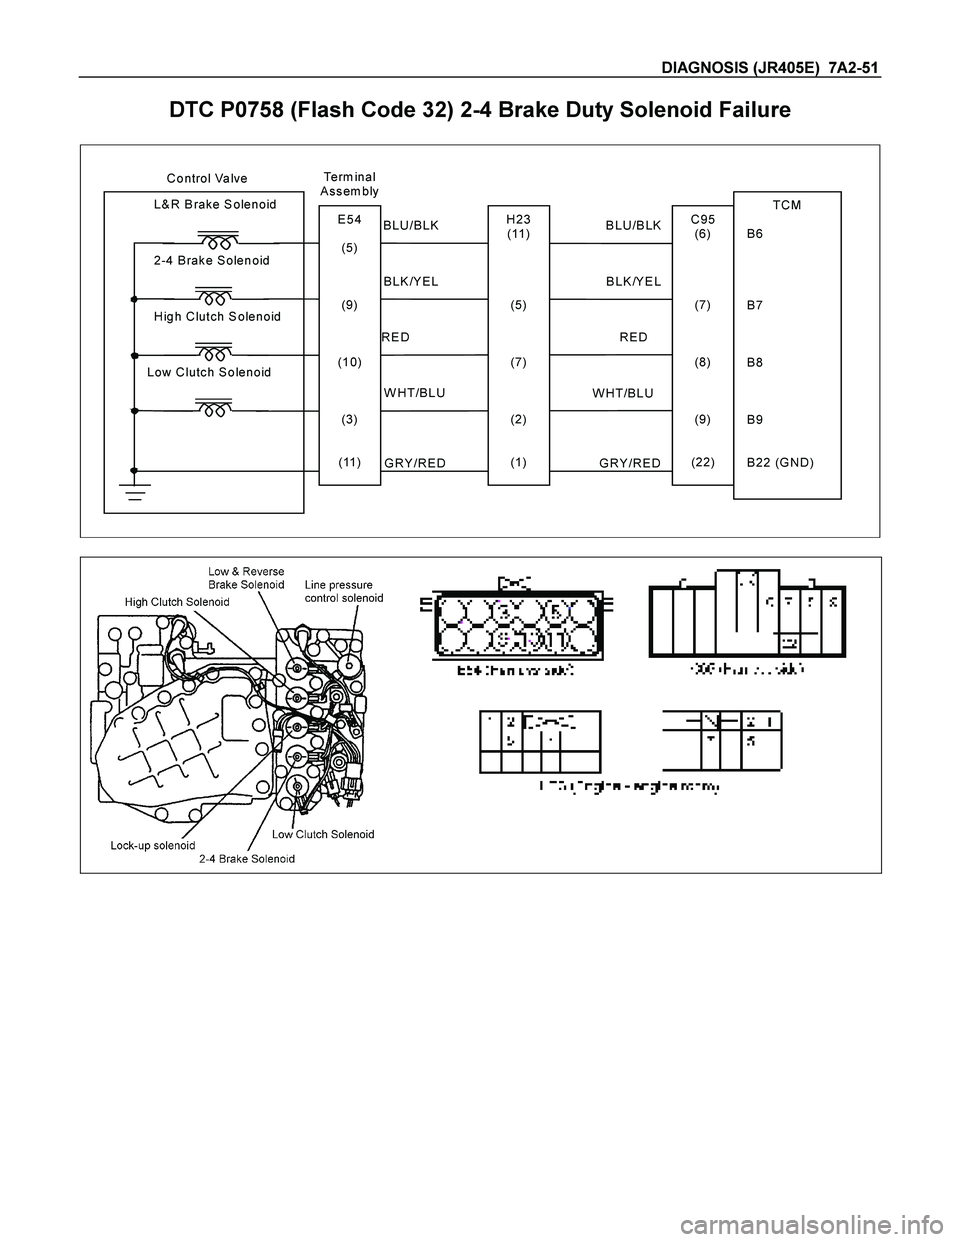 ISUZU TF SERIES 2004  Workshop Manual DIAGNOSIS (JR405E)  7A2-51  
DTC P0758 (Flash Code 32) 2-4 Brake Duty Solenoid Failure 
  
 
 
       C ontrol Valve
               
                                        TCM 
B6 
B7 
B8 
B9 
B22 (G